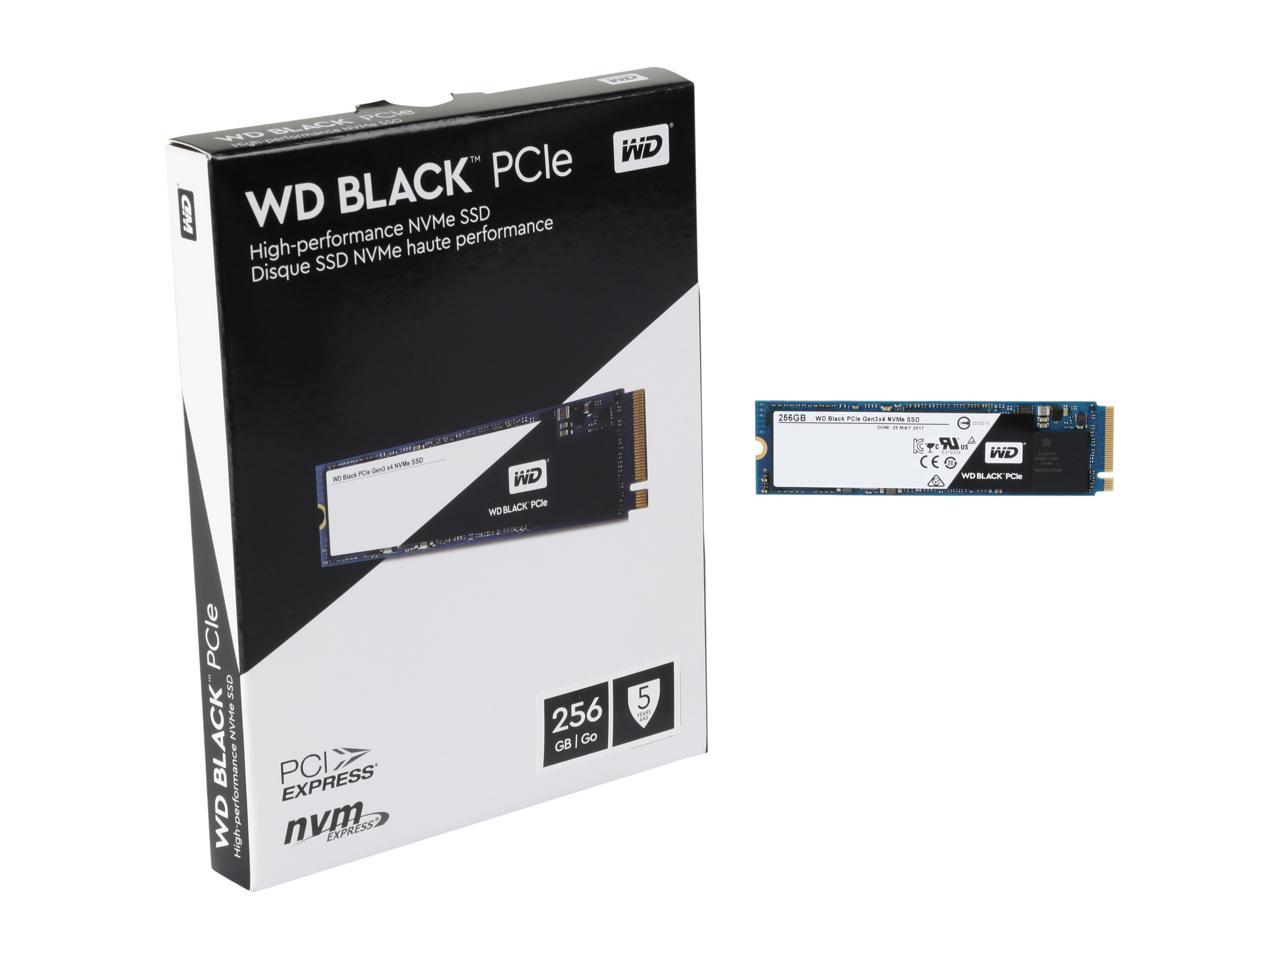 Wd Black 256gb Performance Ssd M 2 2280 Pcie Nvme Solid State Drive Wds256g1x0c Newegg Com